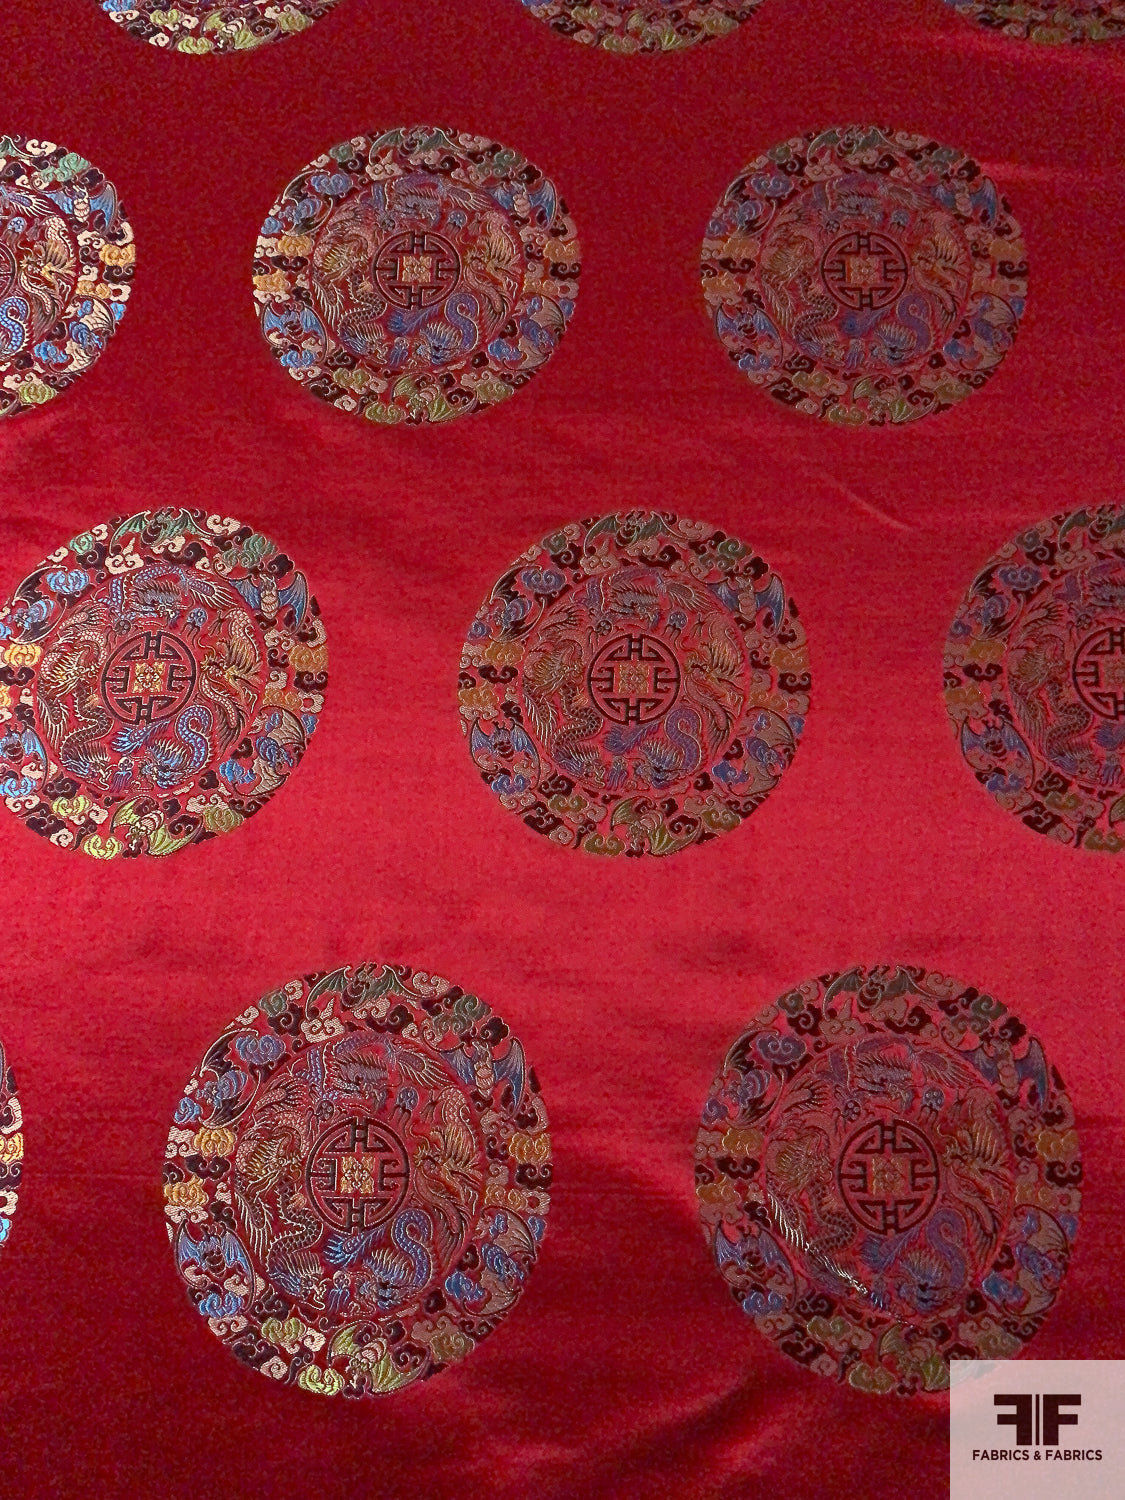 Ornate Circular Discs Oriental Satin Jacquard Brocade - Red / Navy / Blue / Gold